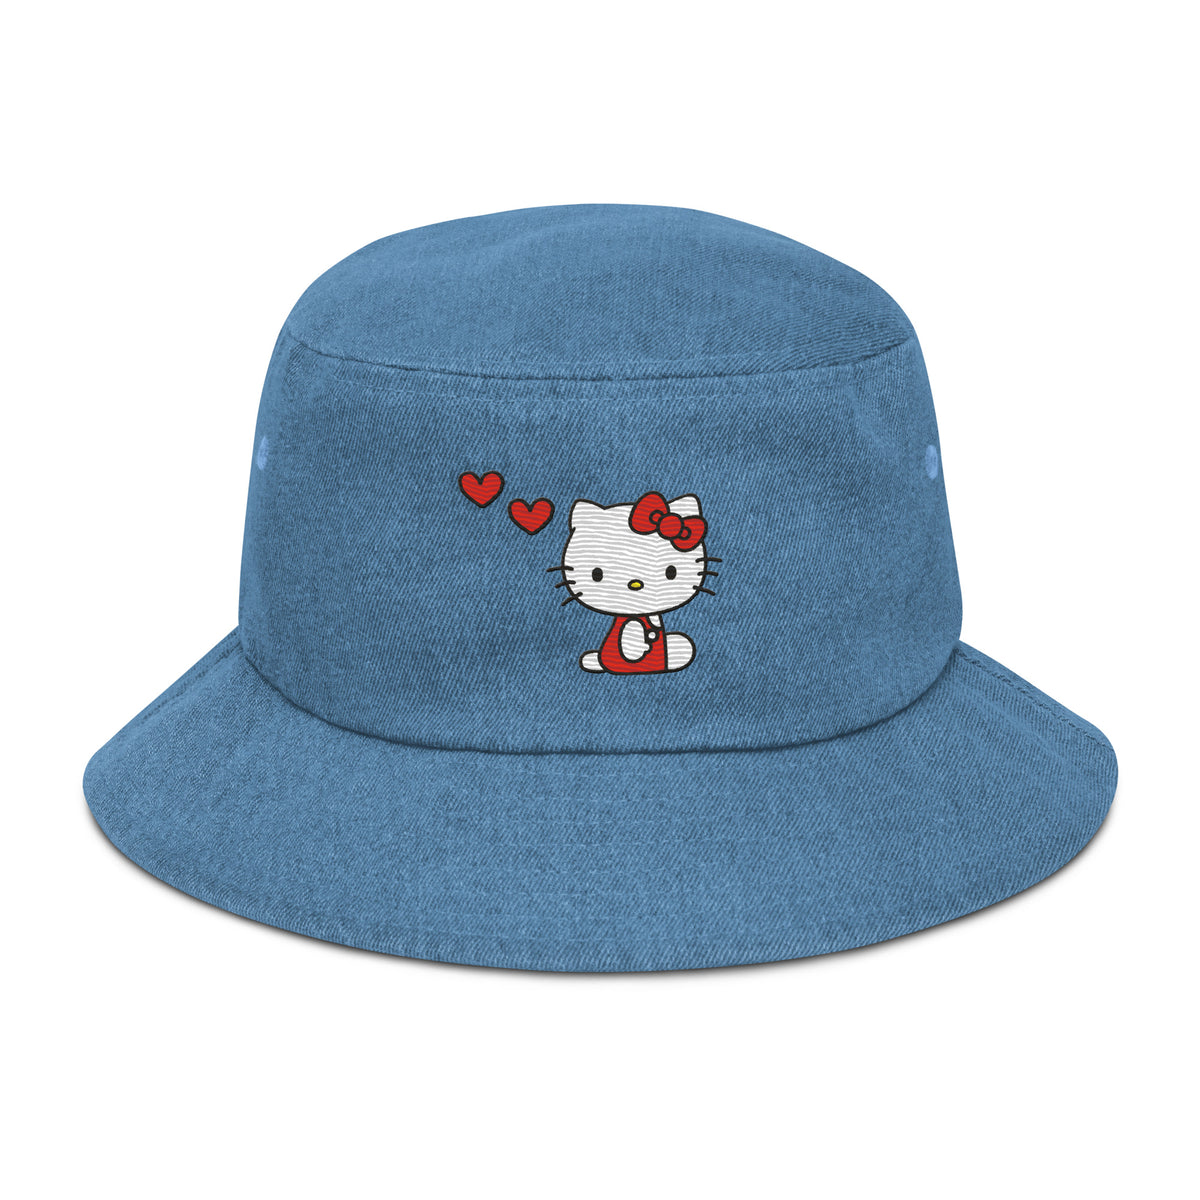 Hello Kitty Embroidered Denim Bucket Hat Apparel Printful Light Denim  